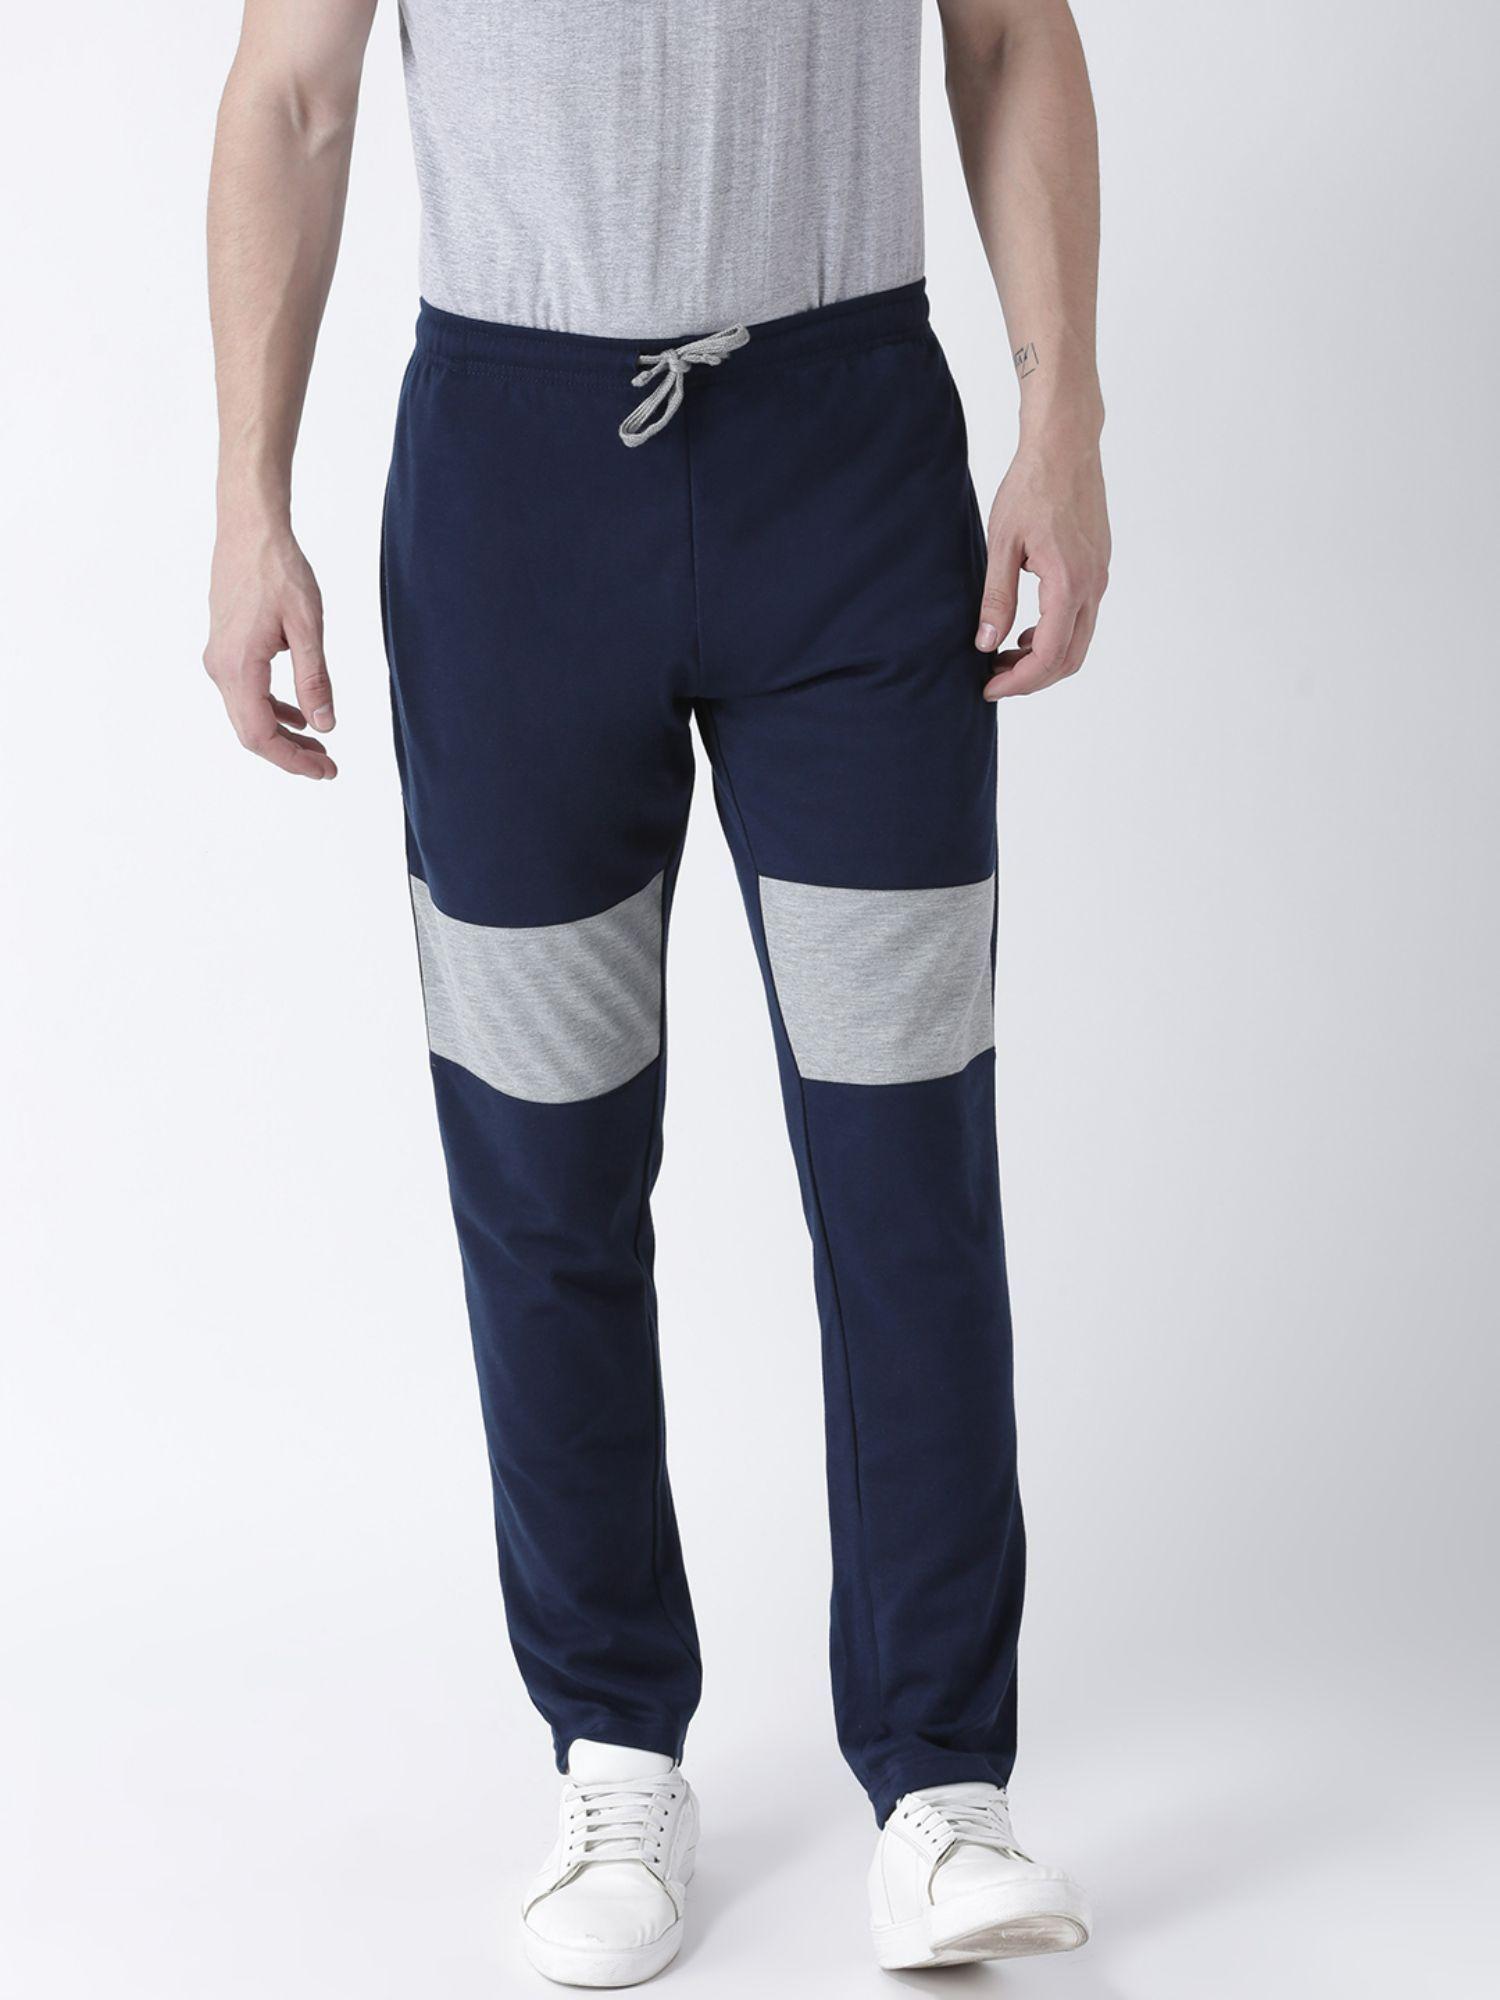 men navy blue solid track pant has contrast cut panel